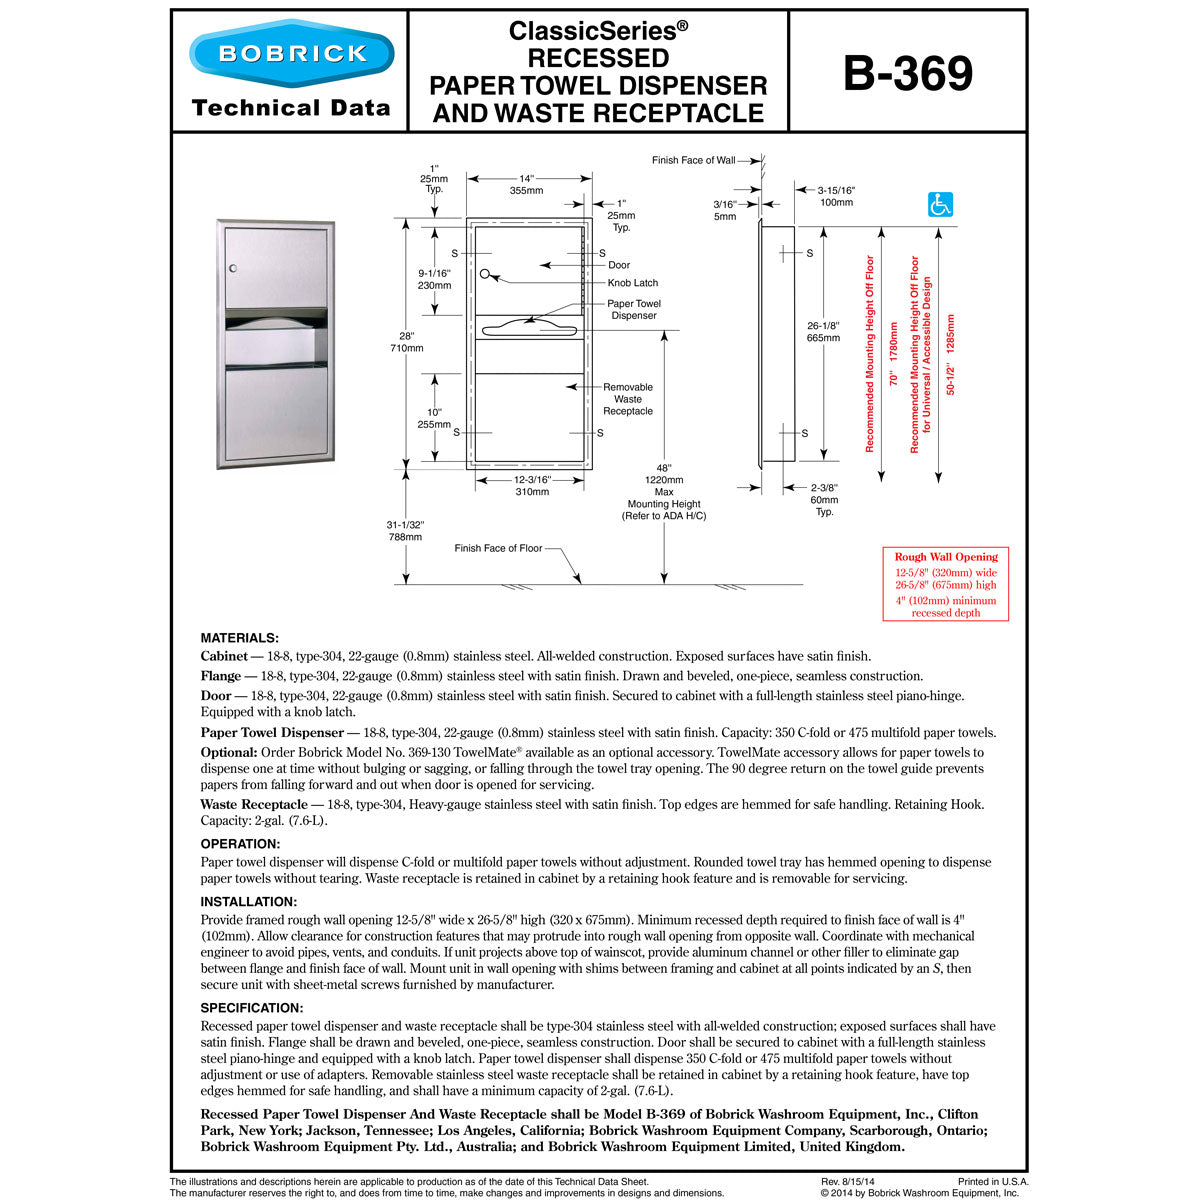 Bobrick B-369 Recessed Paper Towel Dispenser/Waste Receptacle